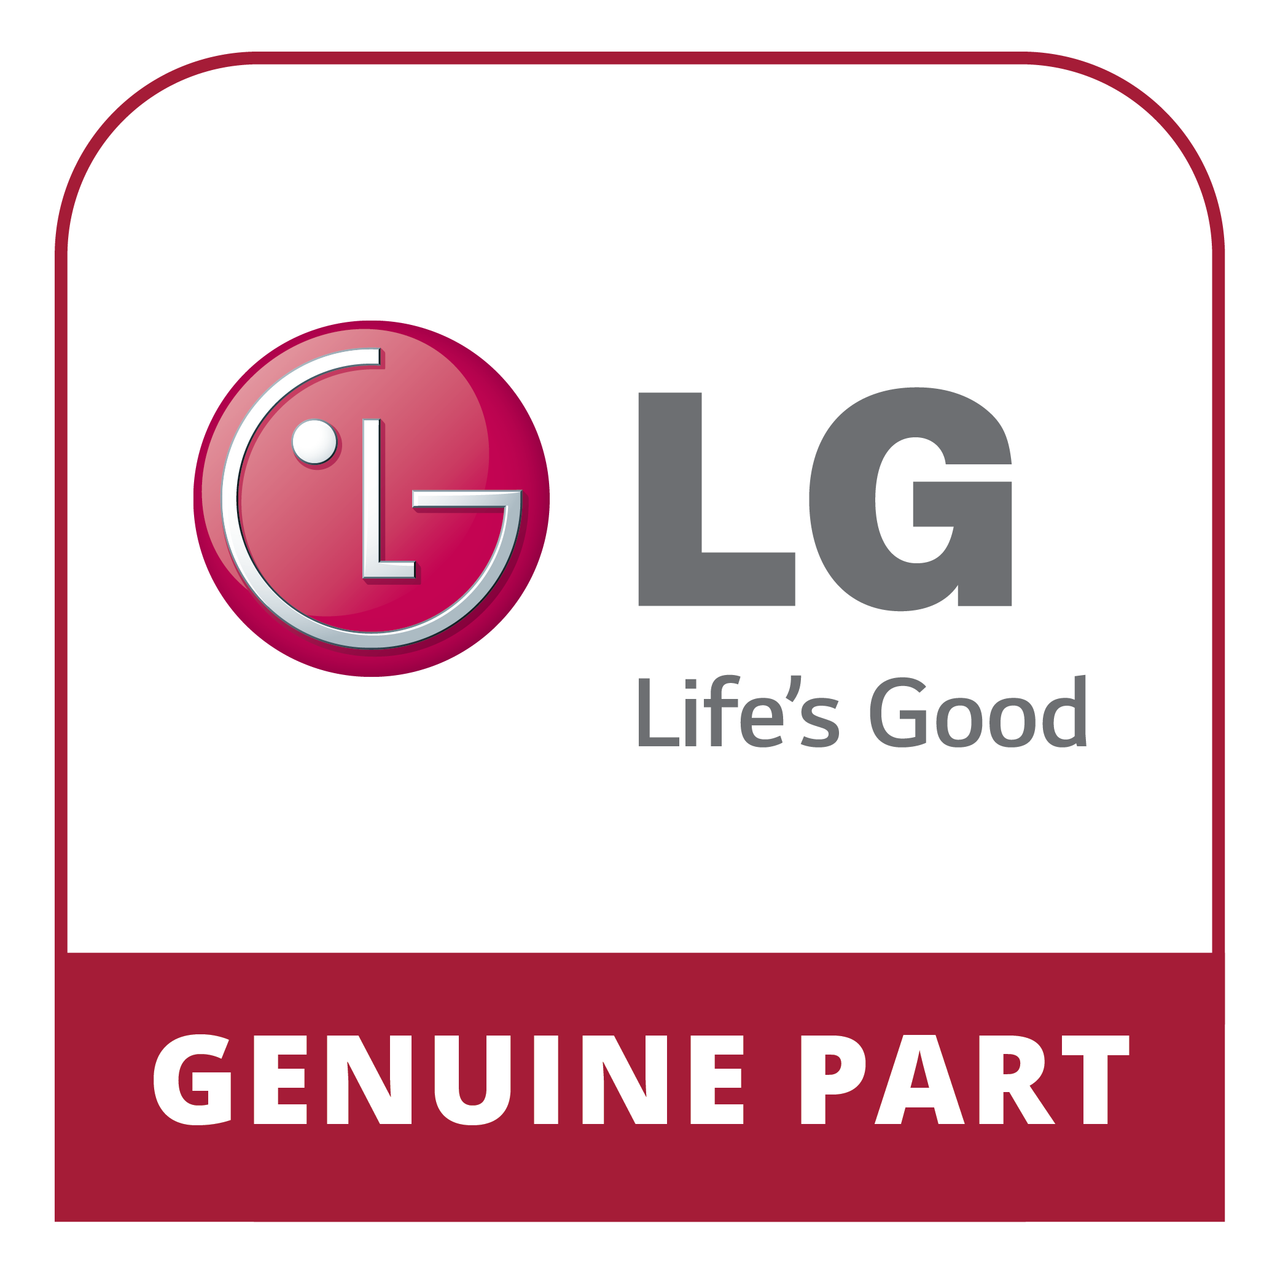 LG MEA66352001 - Guide,Stopper - Genuine LG Part